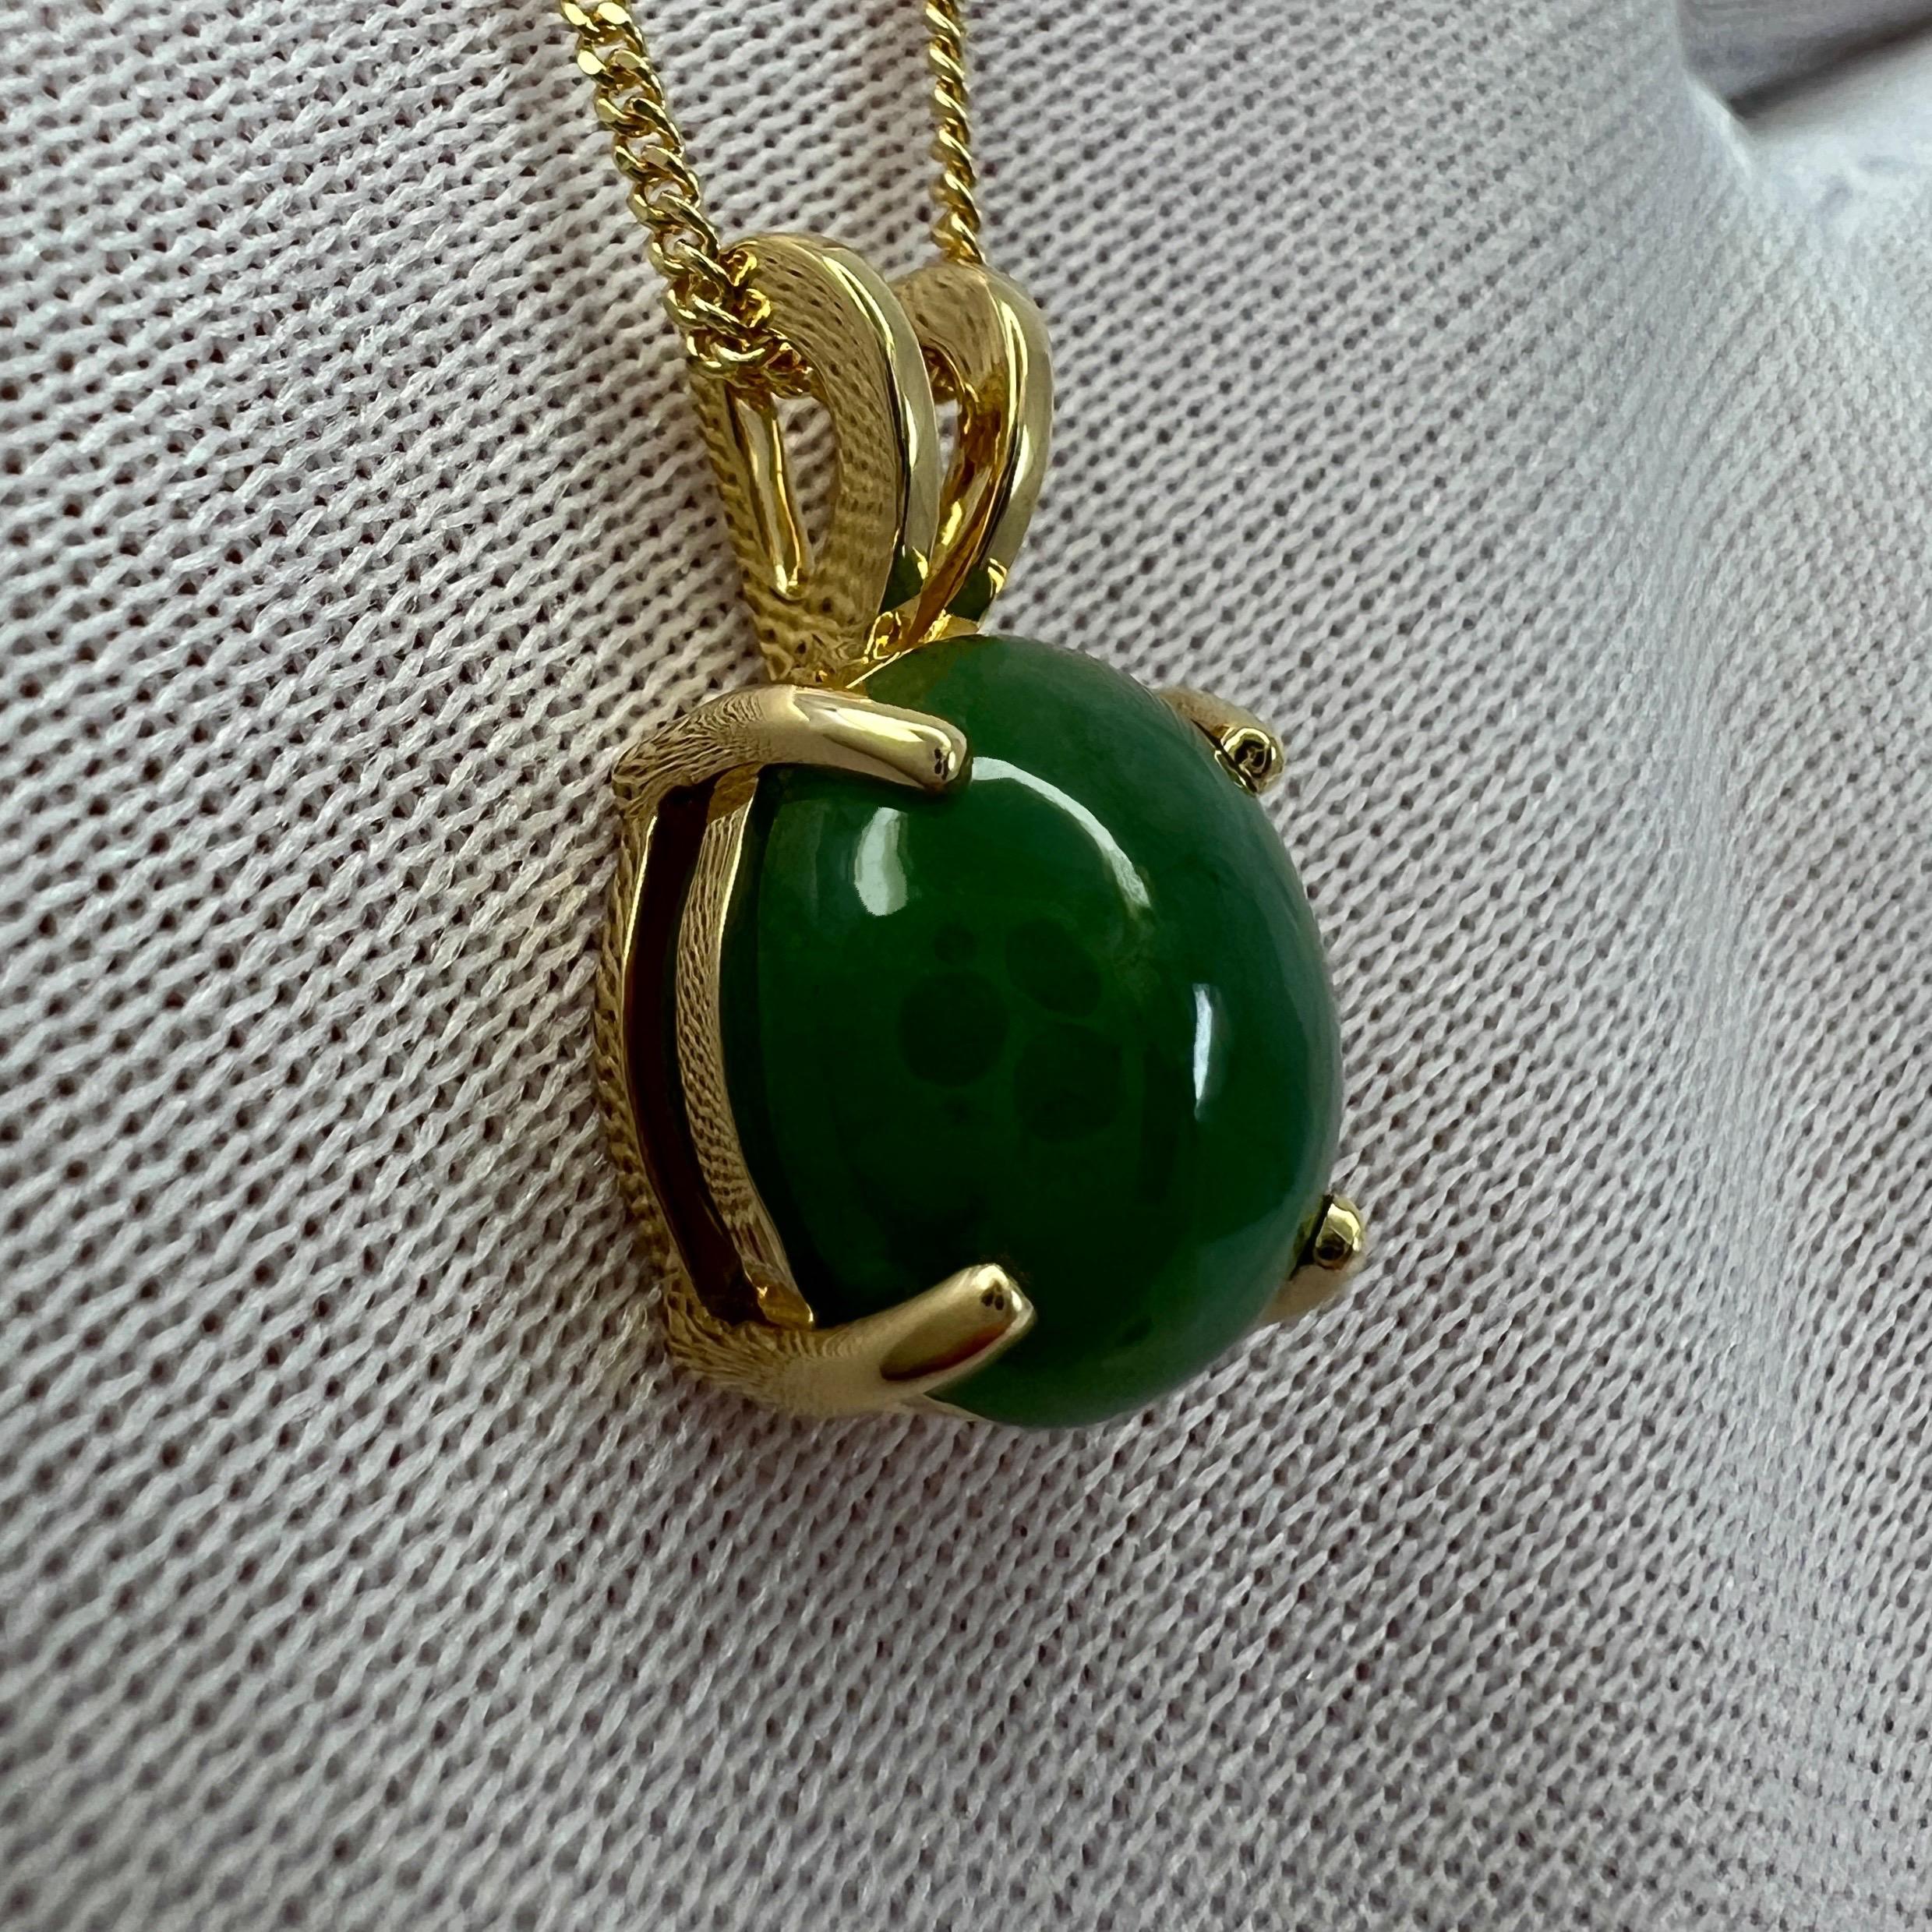 Certified 3.70 Carat Jadeite A-Grade Jade Fine Green Untreated 18k Gold Pendant For Sale 1